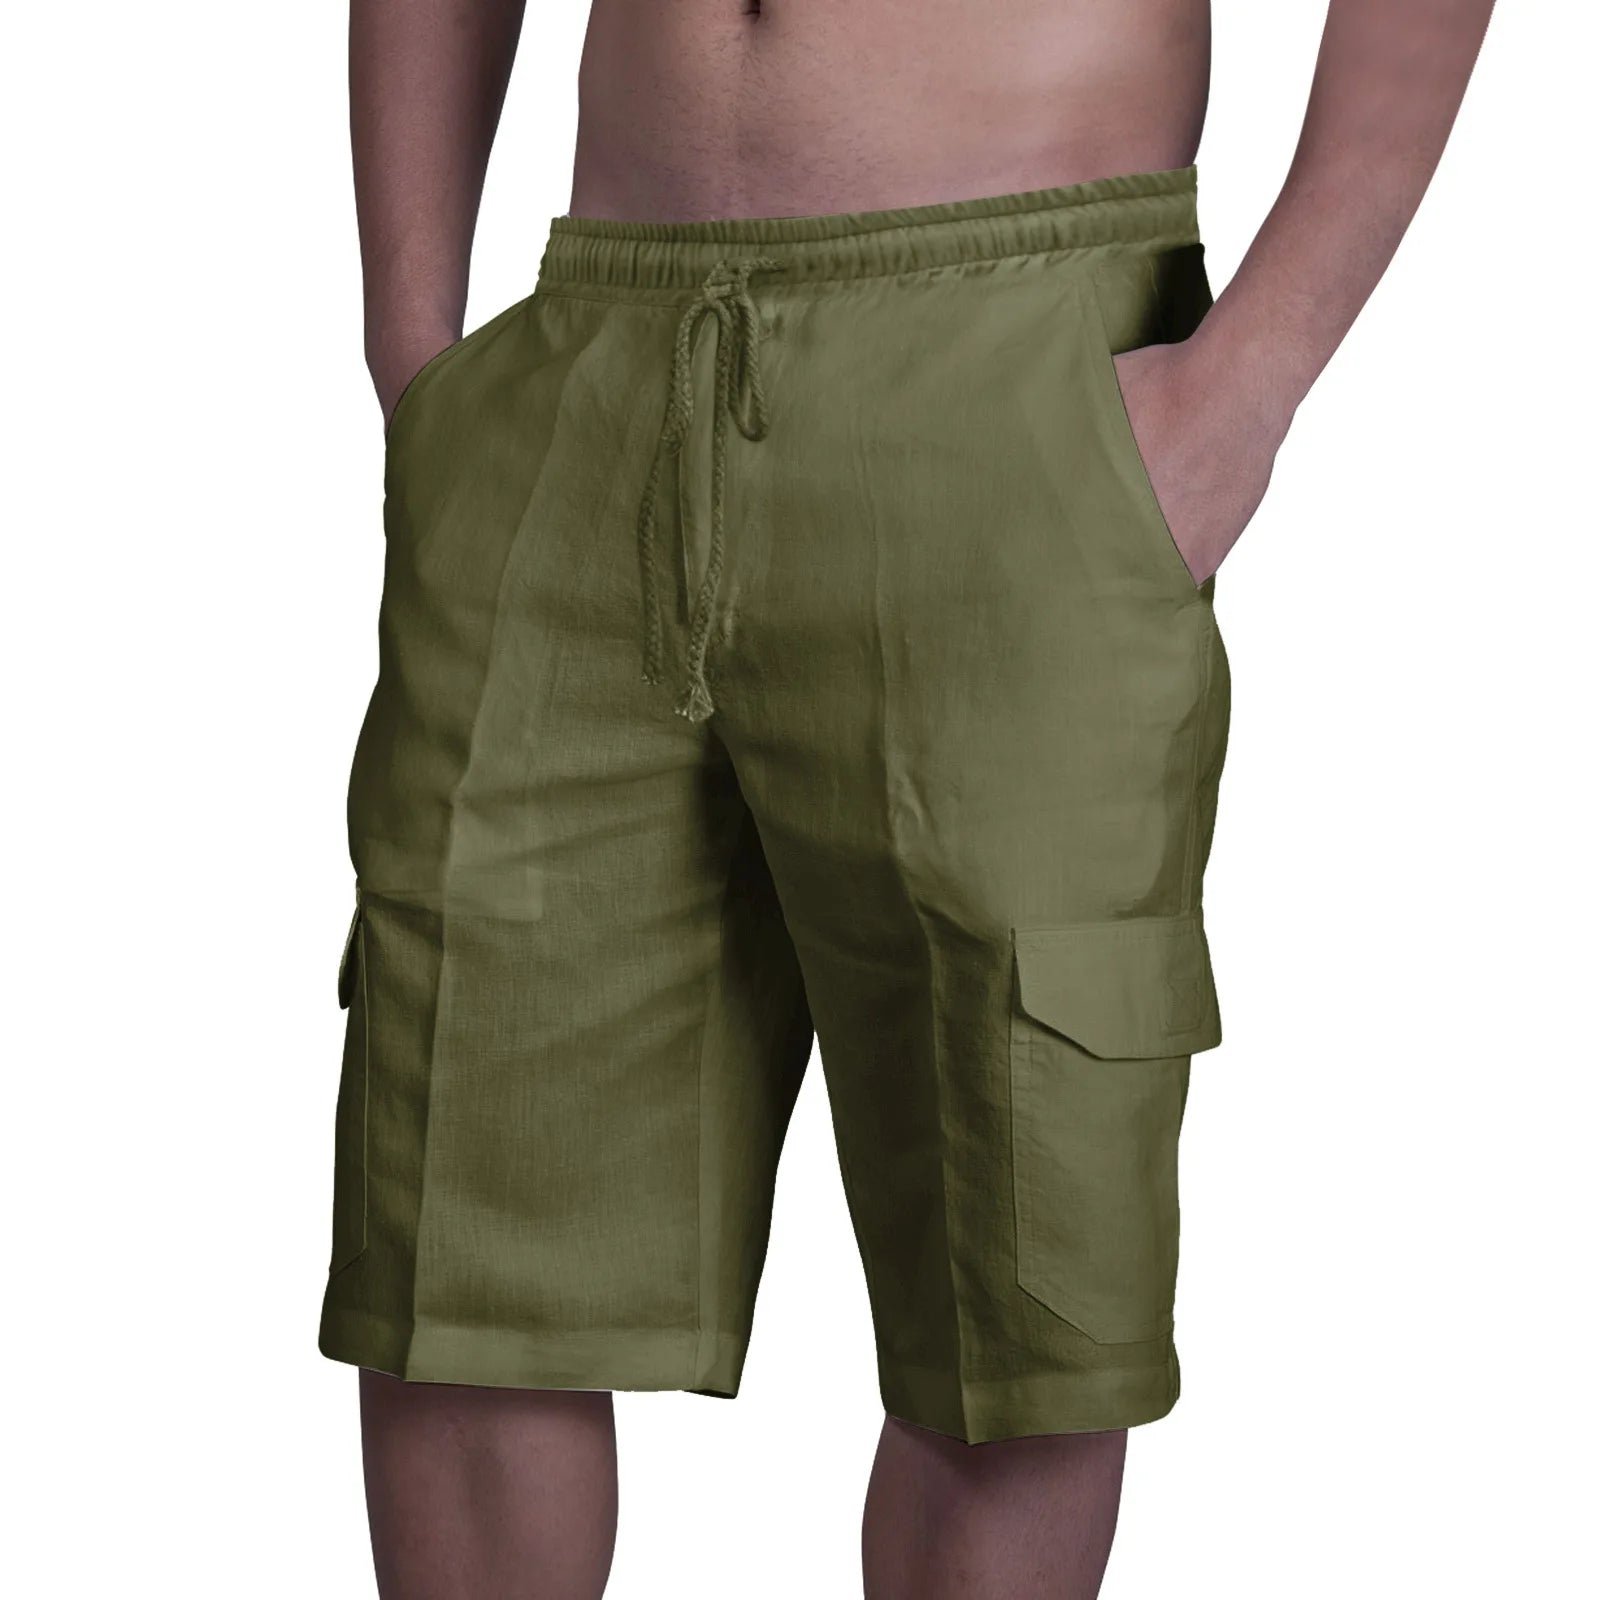 Button Men's Cotton Linen Shorts Pants Male Summer Breathable Solid Color Linen Trousers Fitness Streetwear